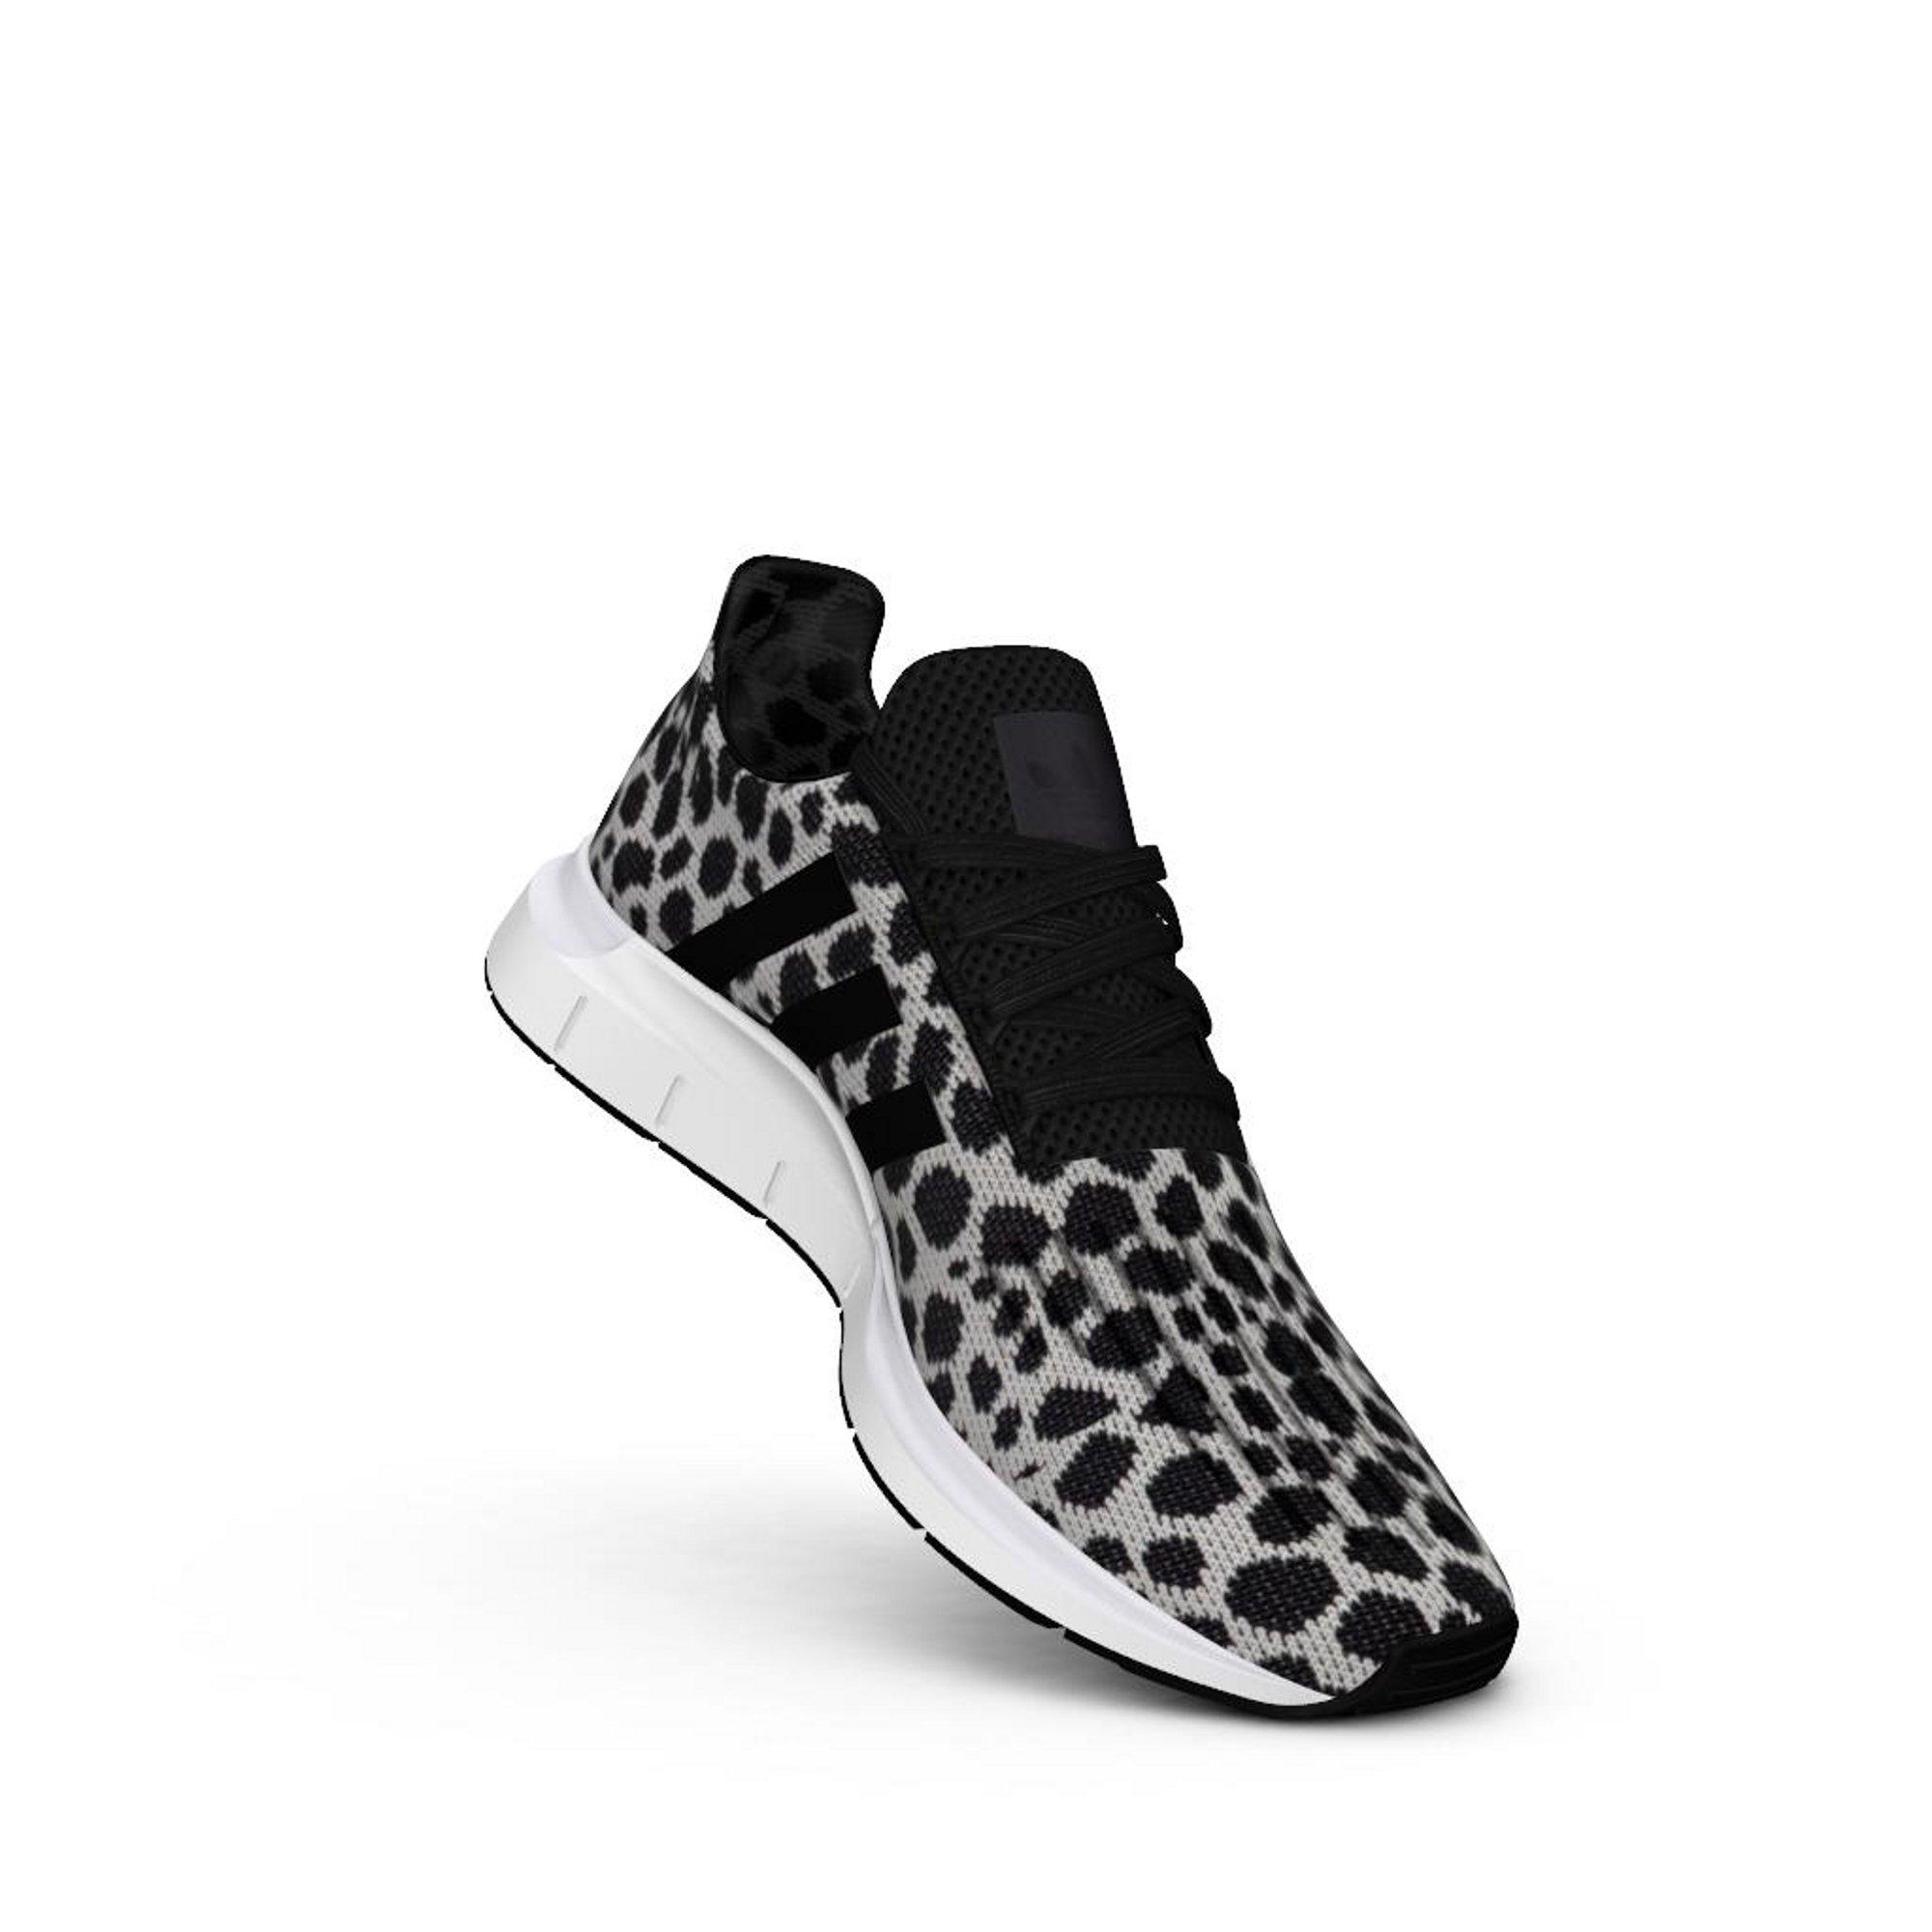 adidas swift run women cheetah